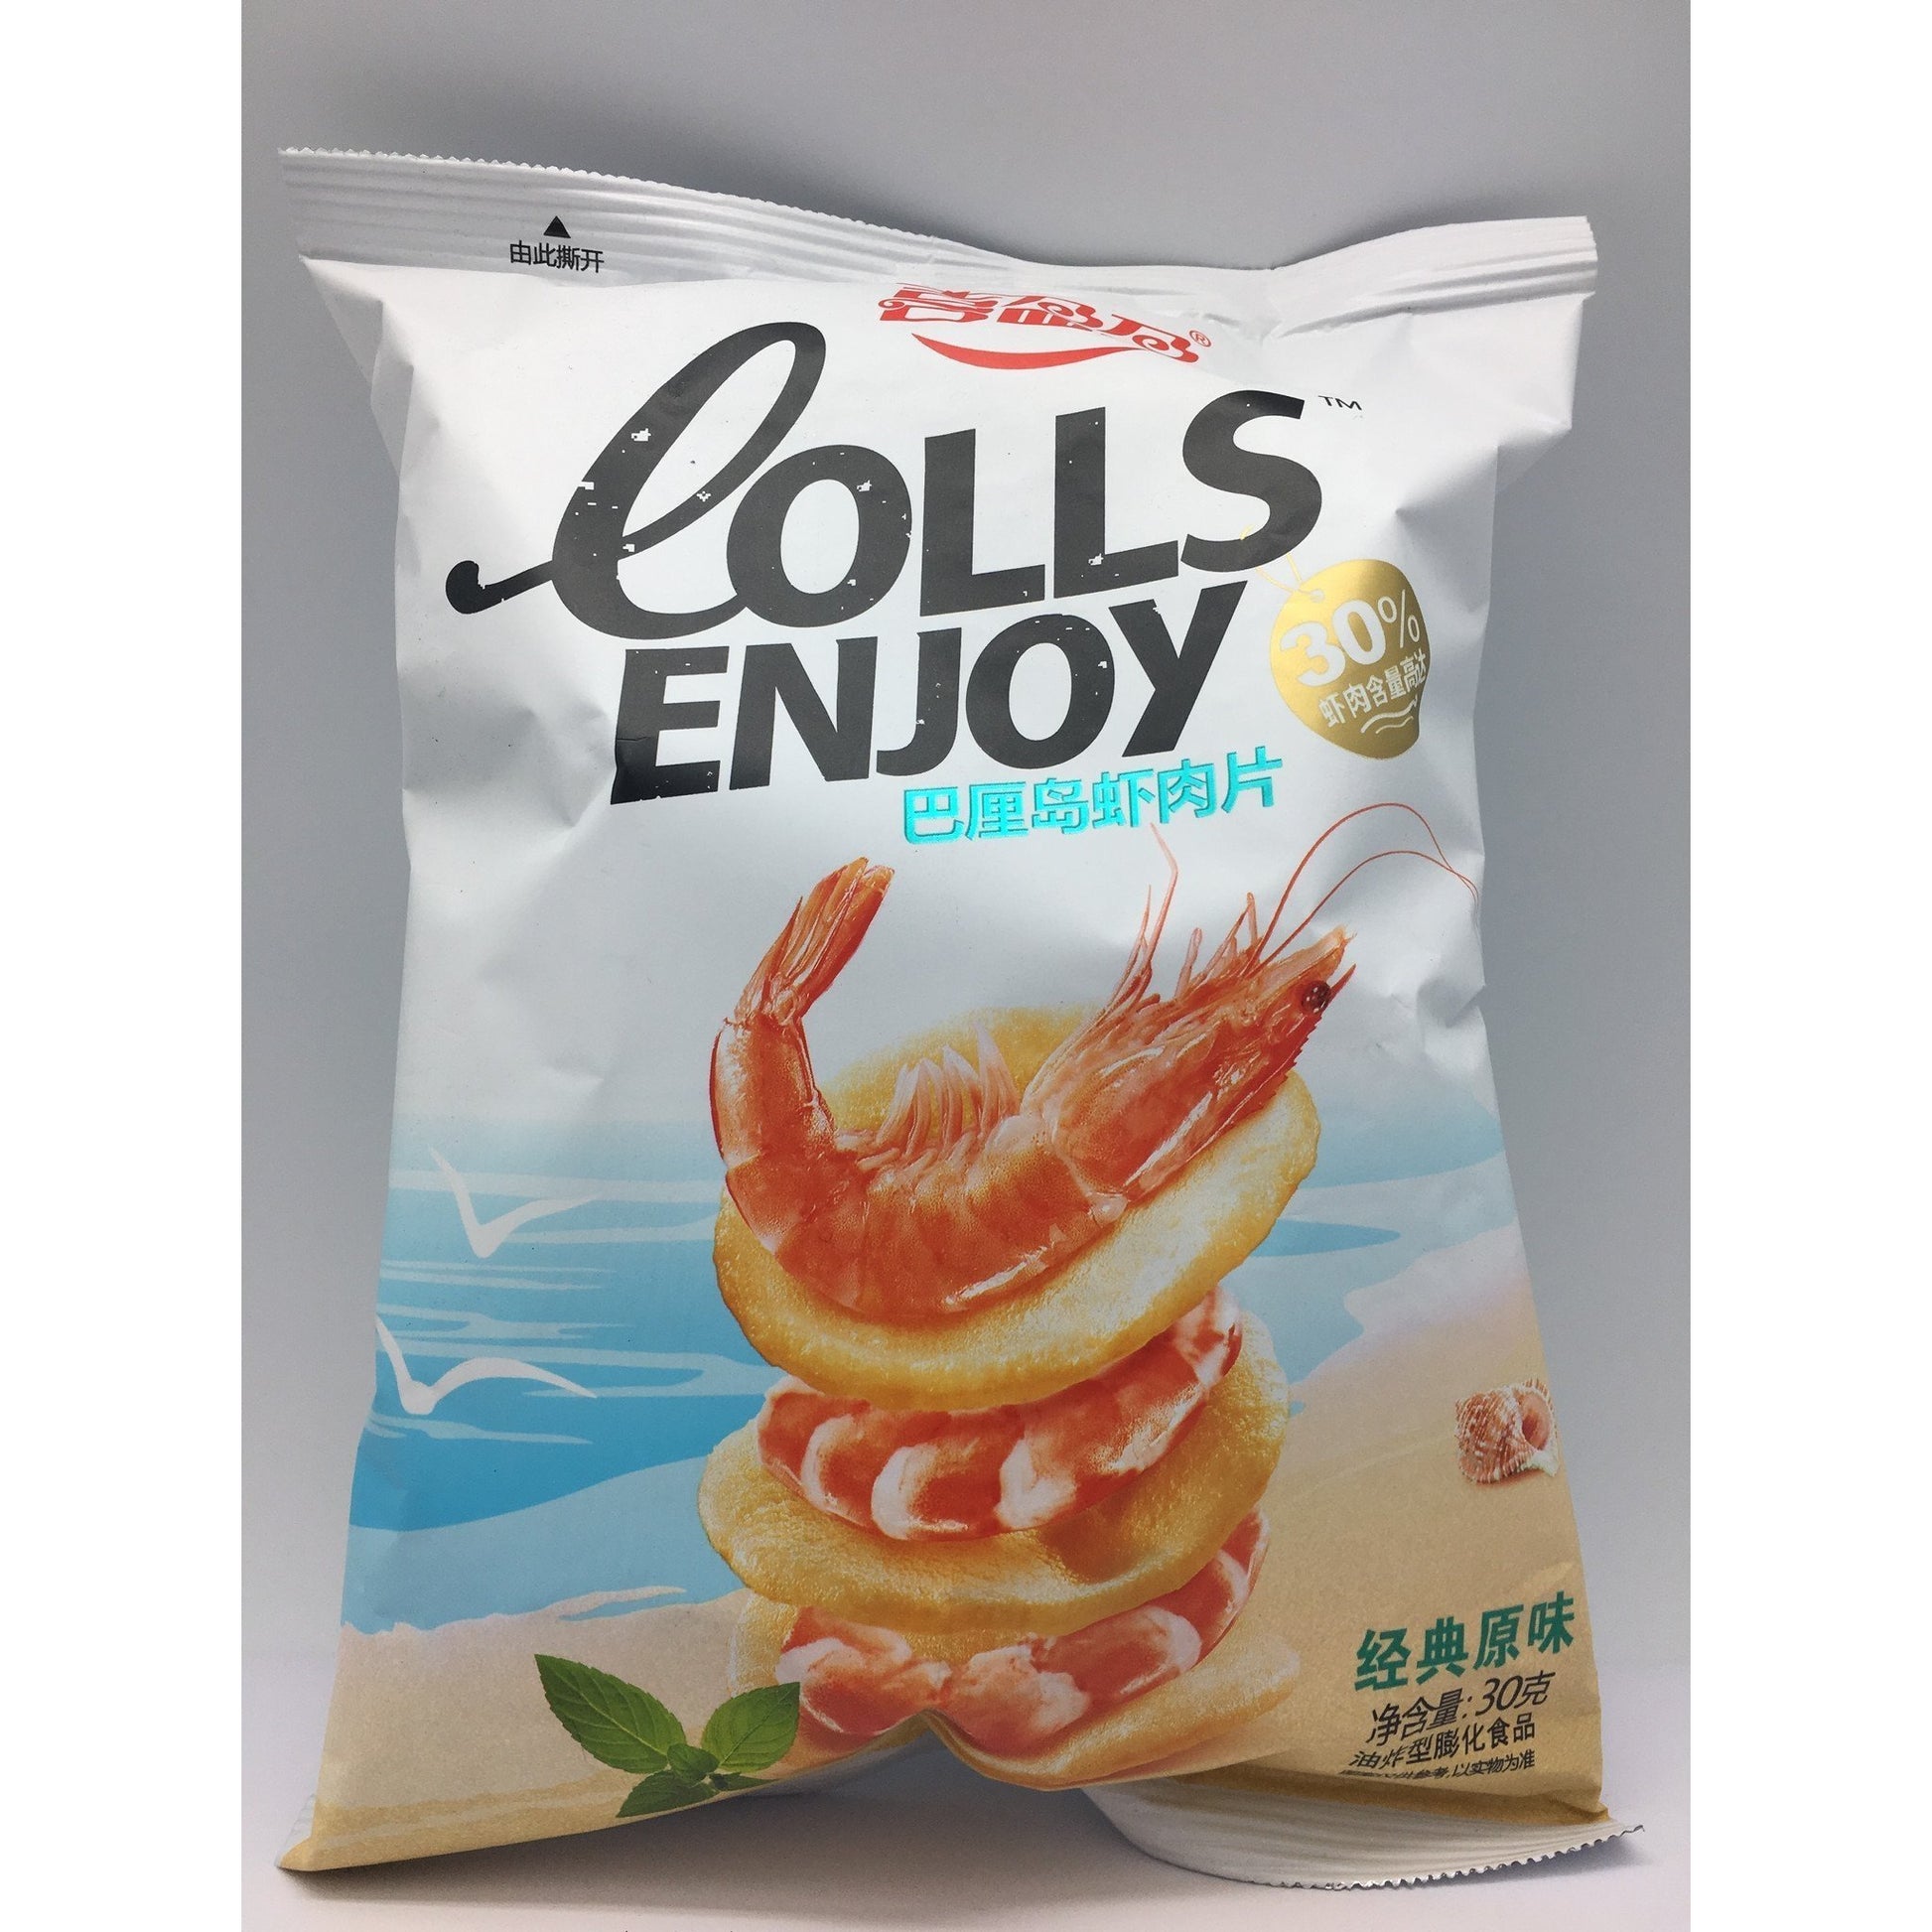 J067BO COLLS Enjoy - (Mint) Prawn Chips 30g - 20 bags  / 1 CTN - New Eastland Pty Ltd - Asian food wholesalers